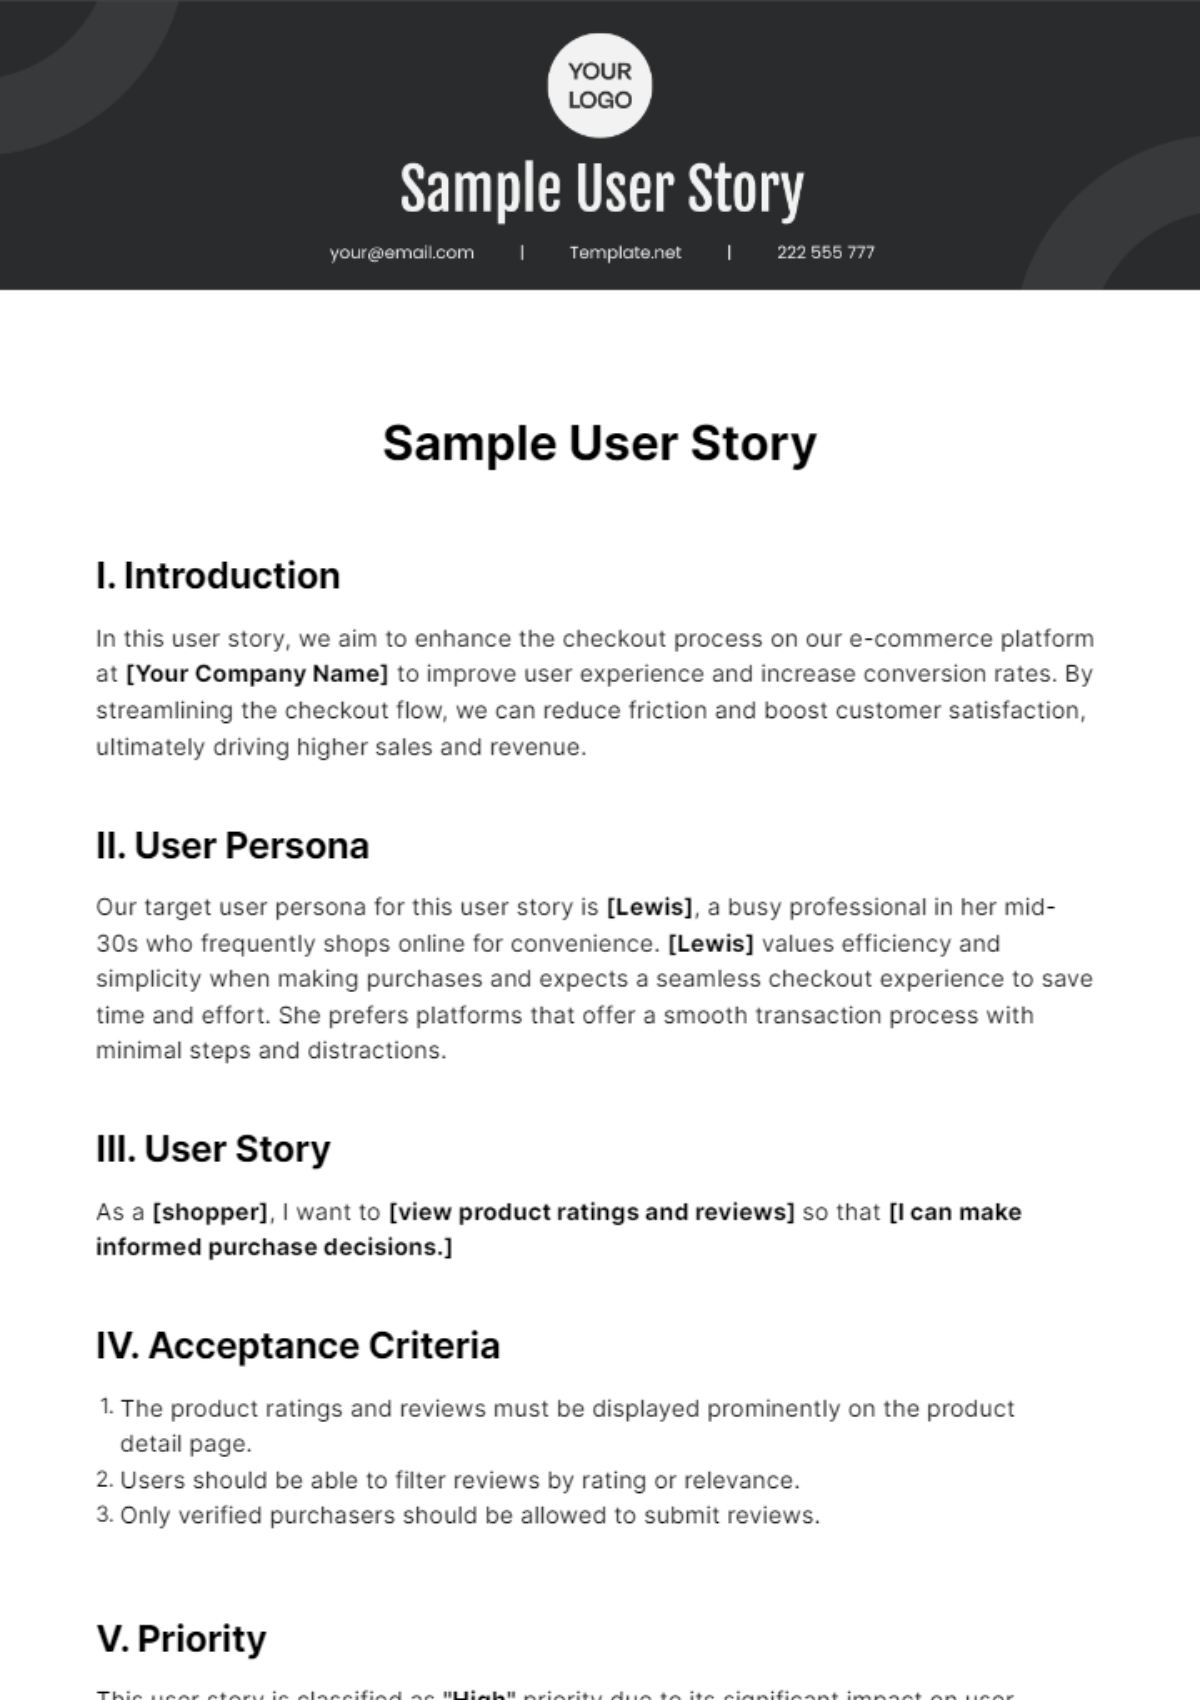 Sample User Story Template